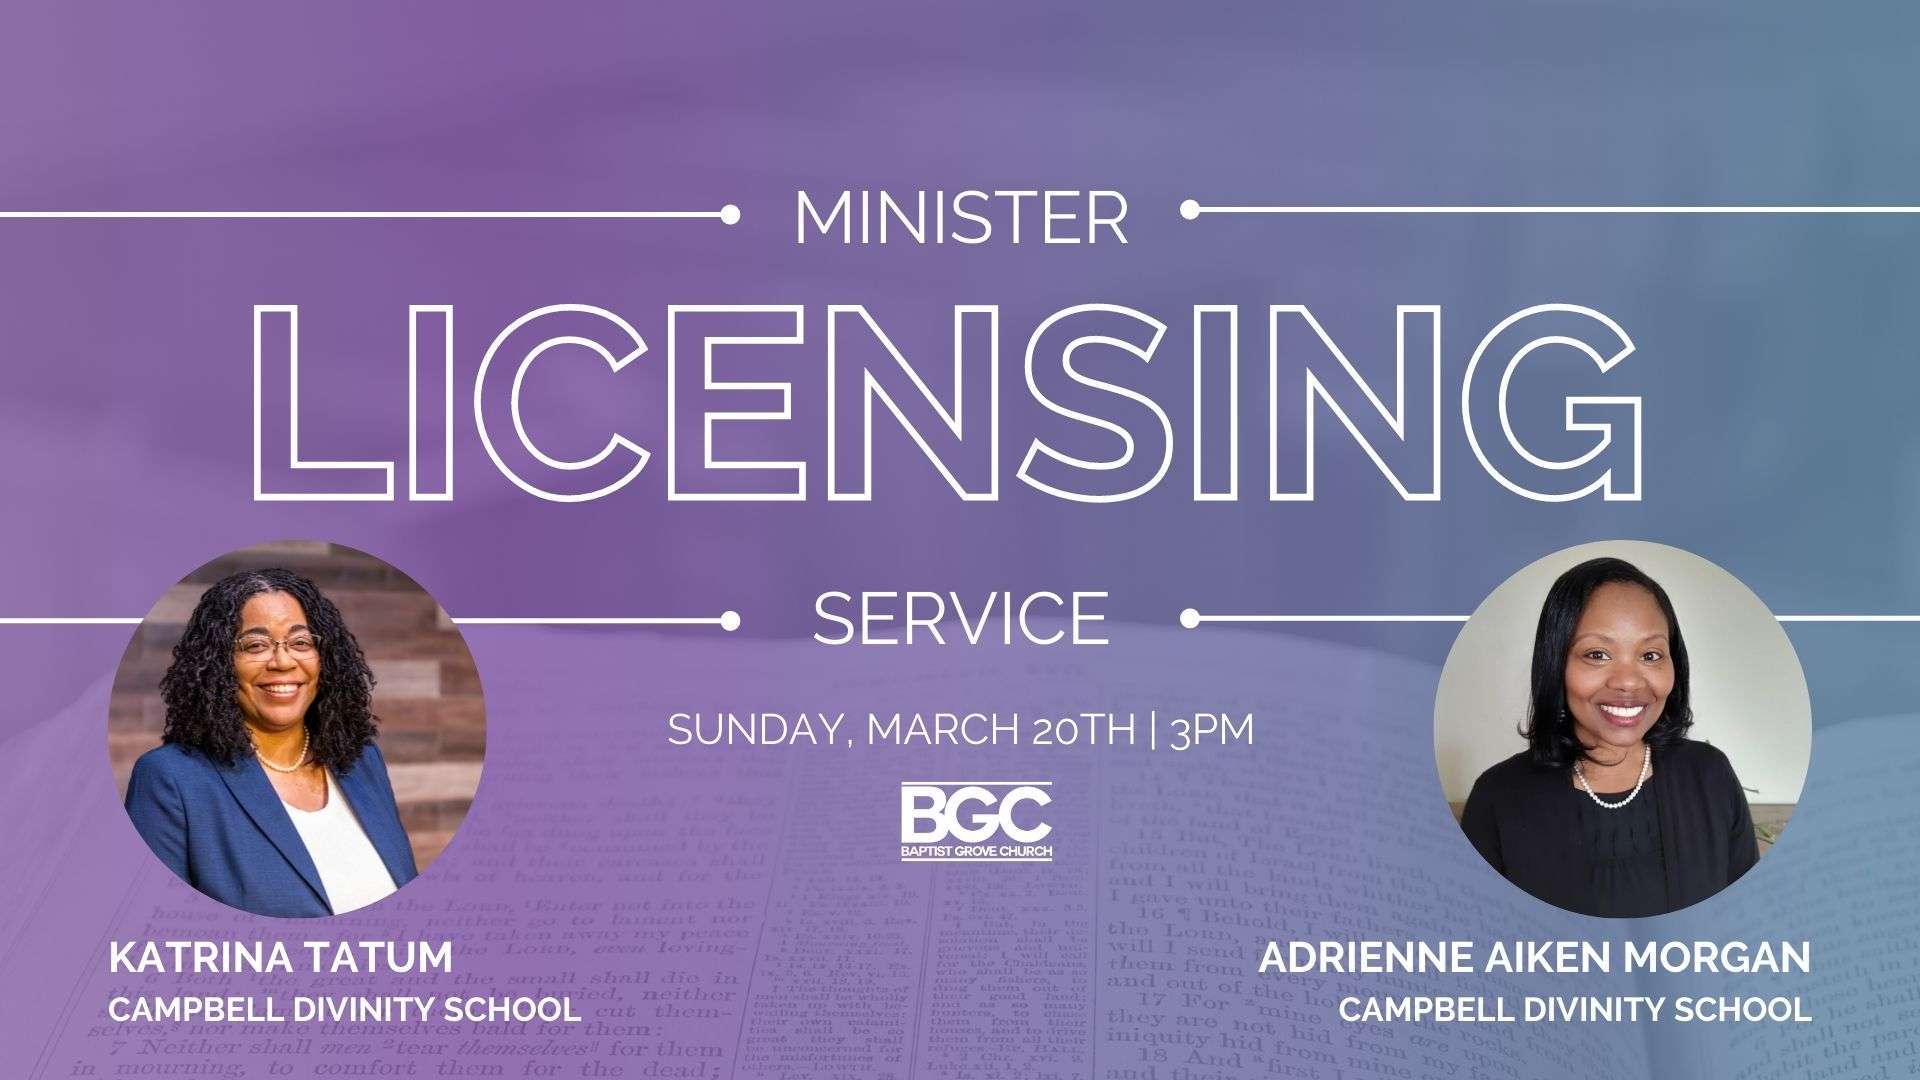 Minister Licensing Service Baptist Grove Church